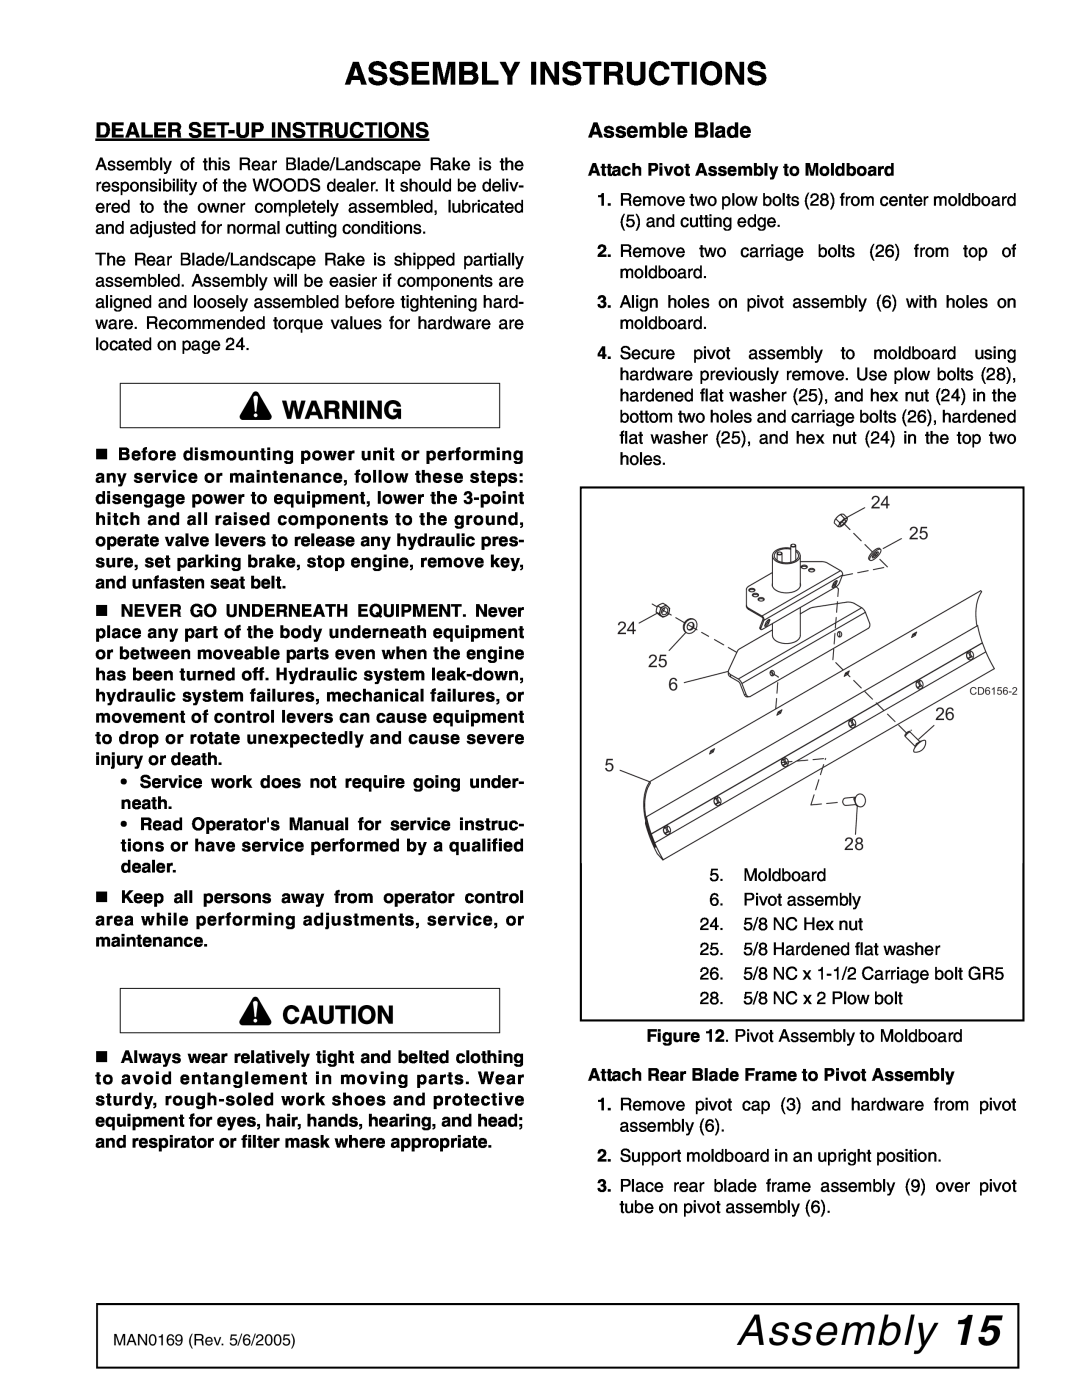 Woods Equipment RBC60 LRC60 manual Assembly Instructions, Dealer Set-Up Instructions, Assemble Blade 